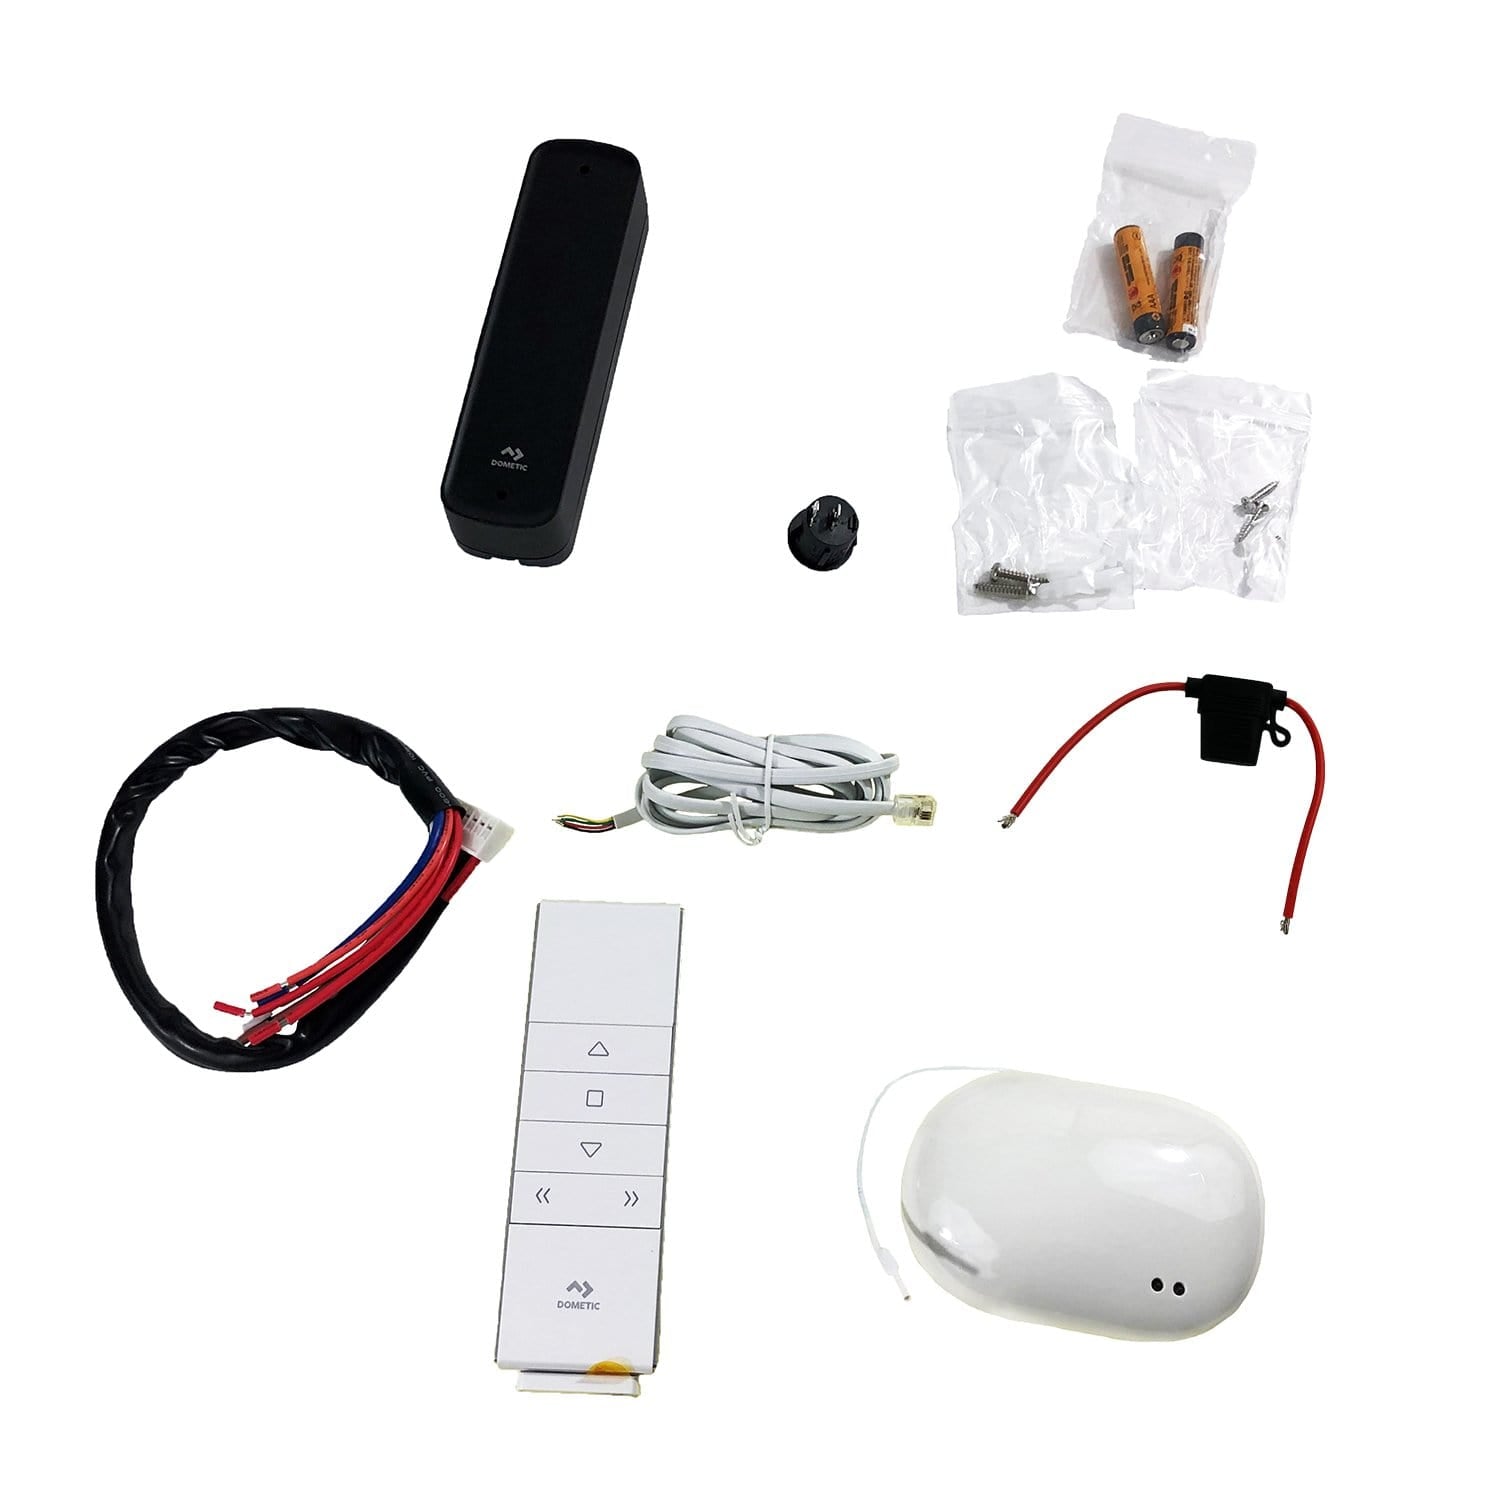 Dometic 3317115.005 Power Awning Pro Kit, Black